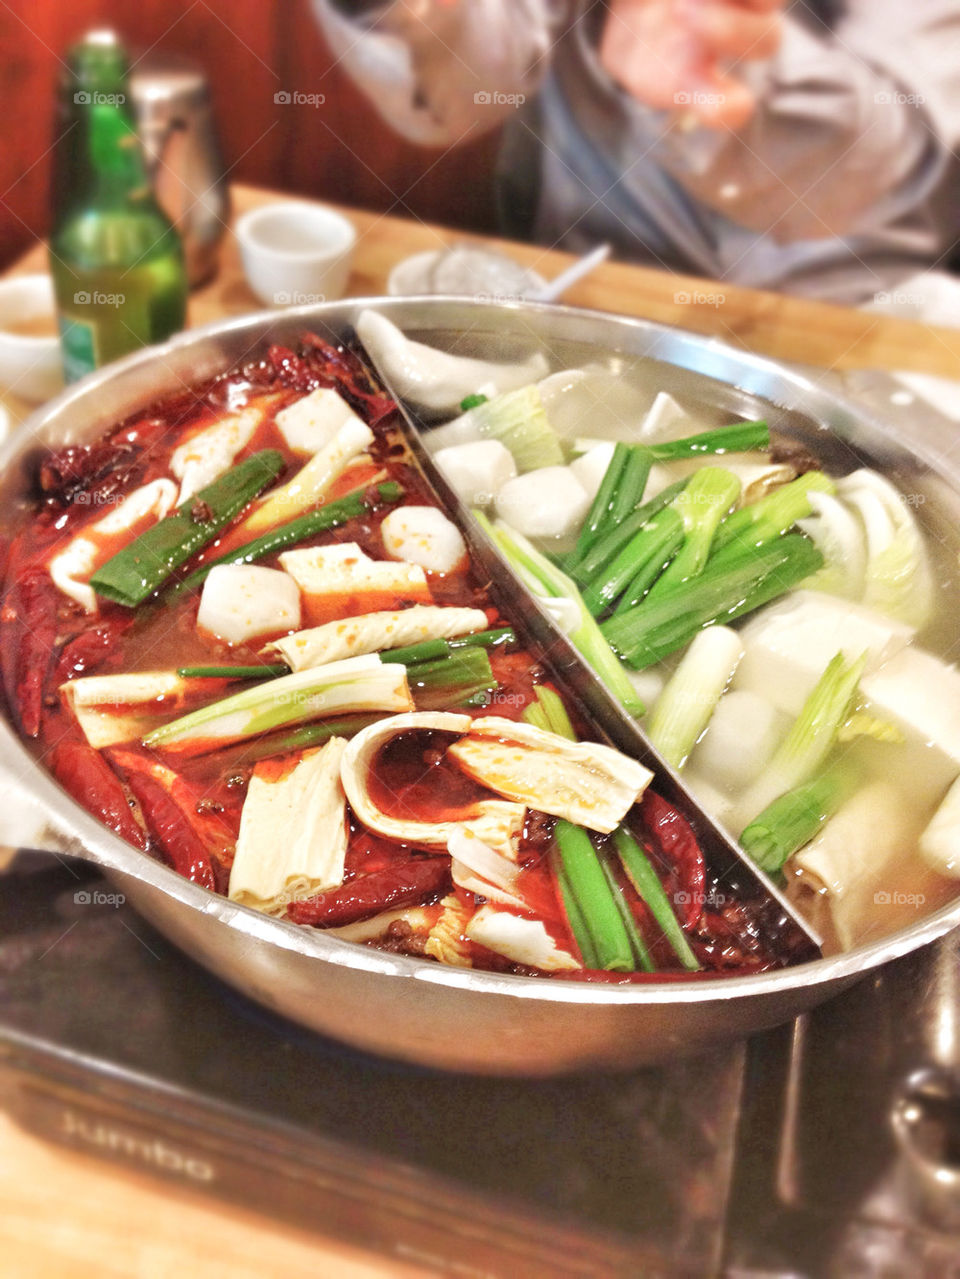 chinese food hot pot by tshfkym